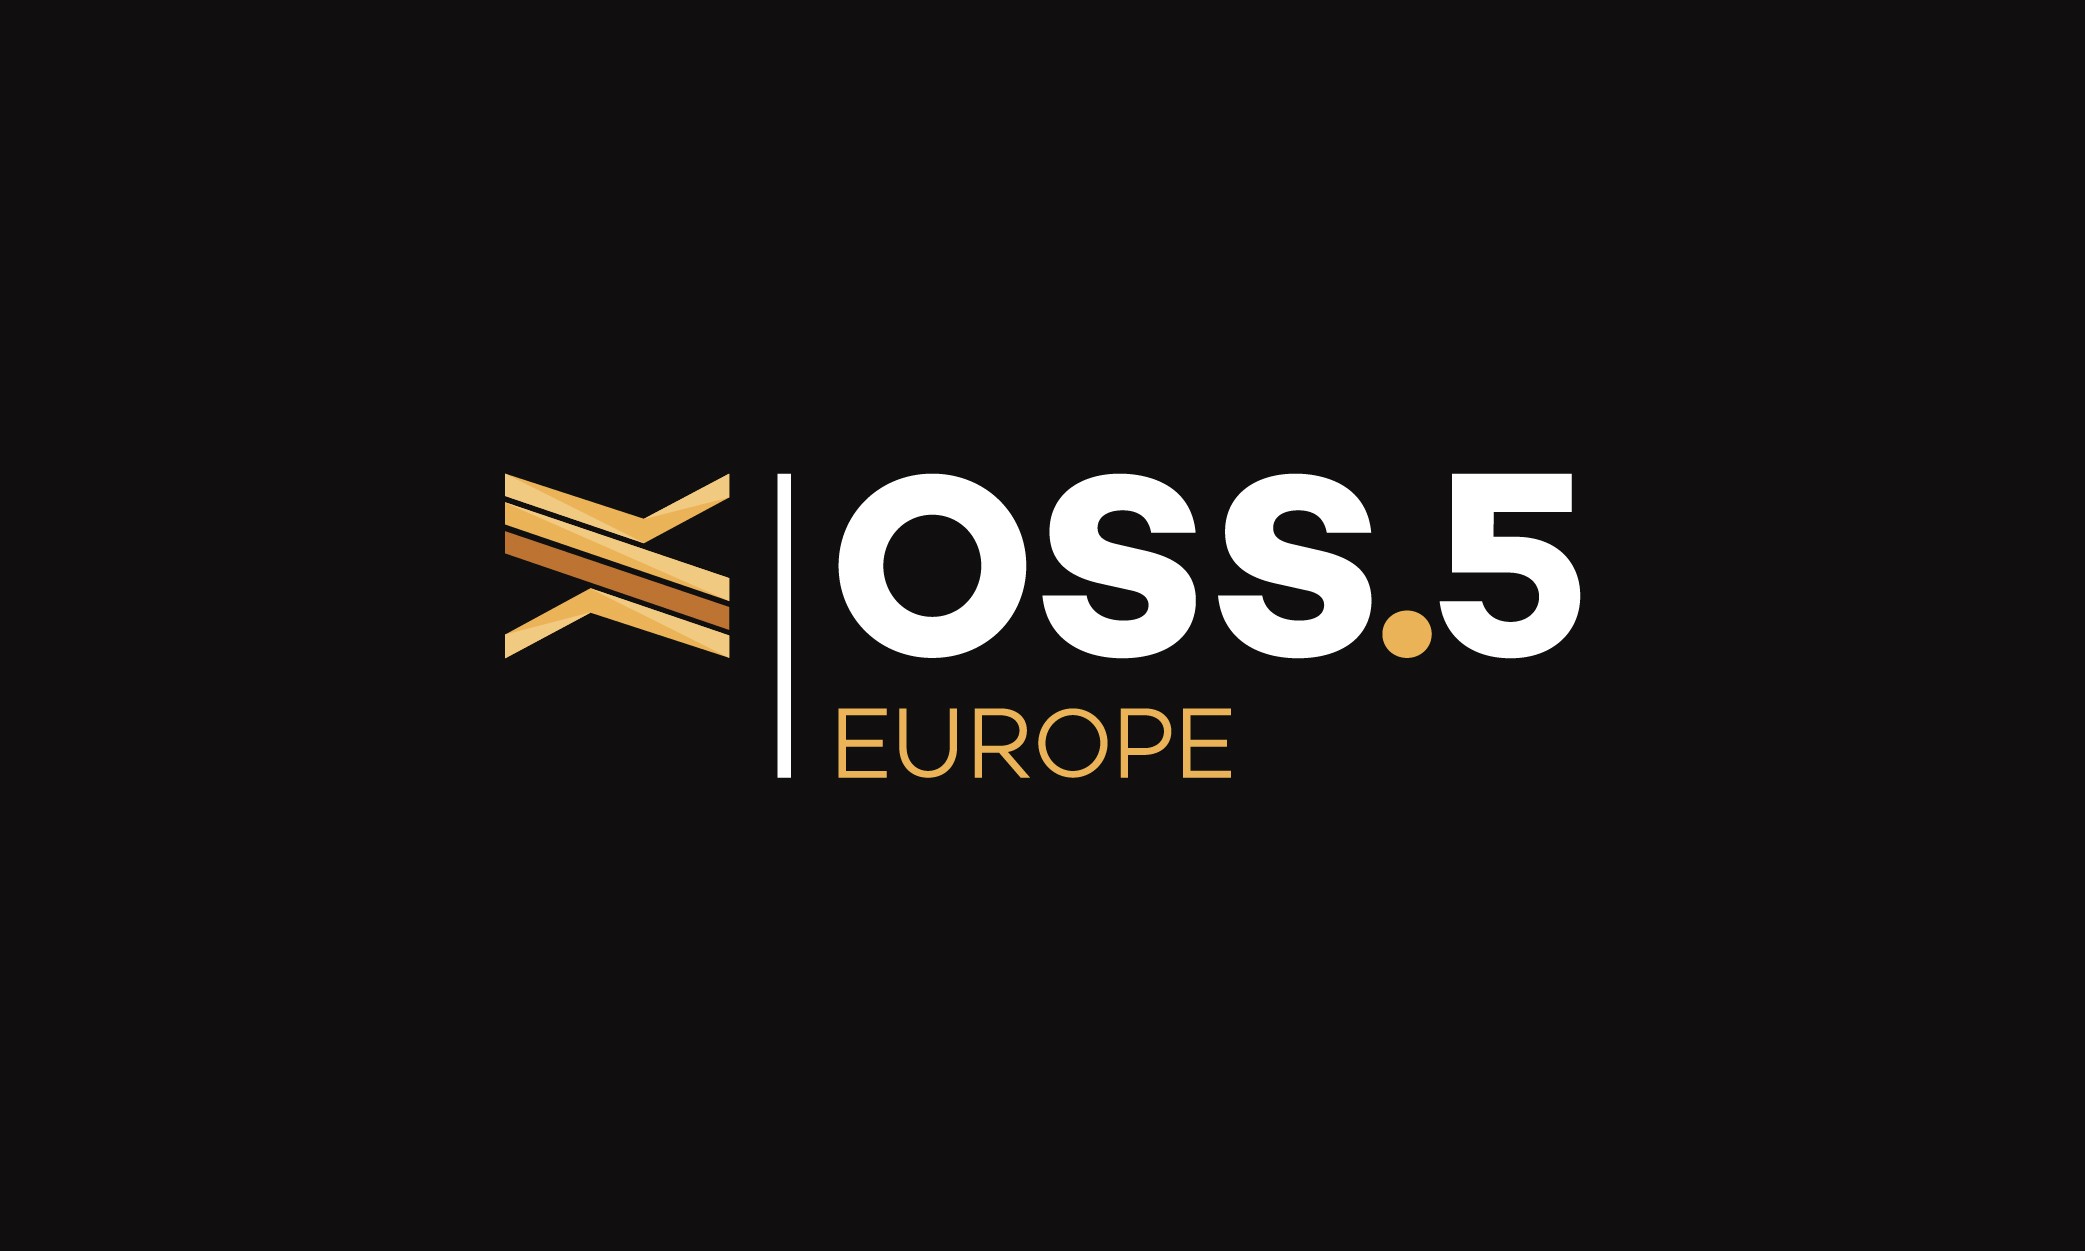 OSS.5 Europe